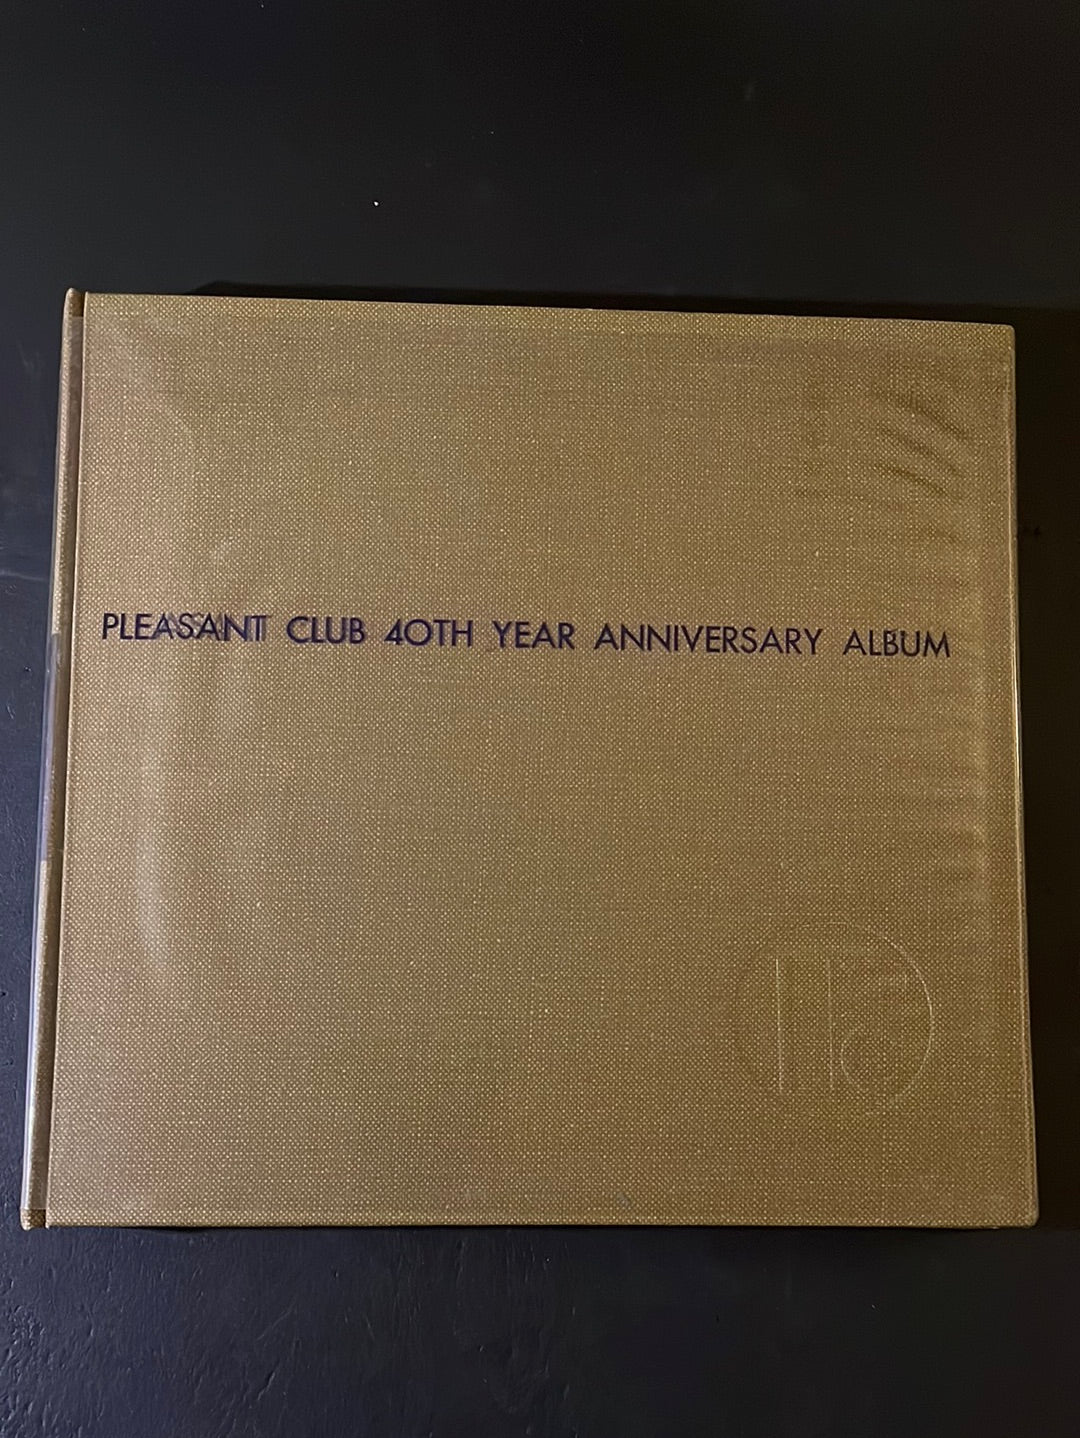 PLEASANT CLUB 40TH YEAR ANNIVERSARY ALBUM